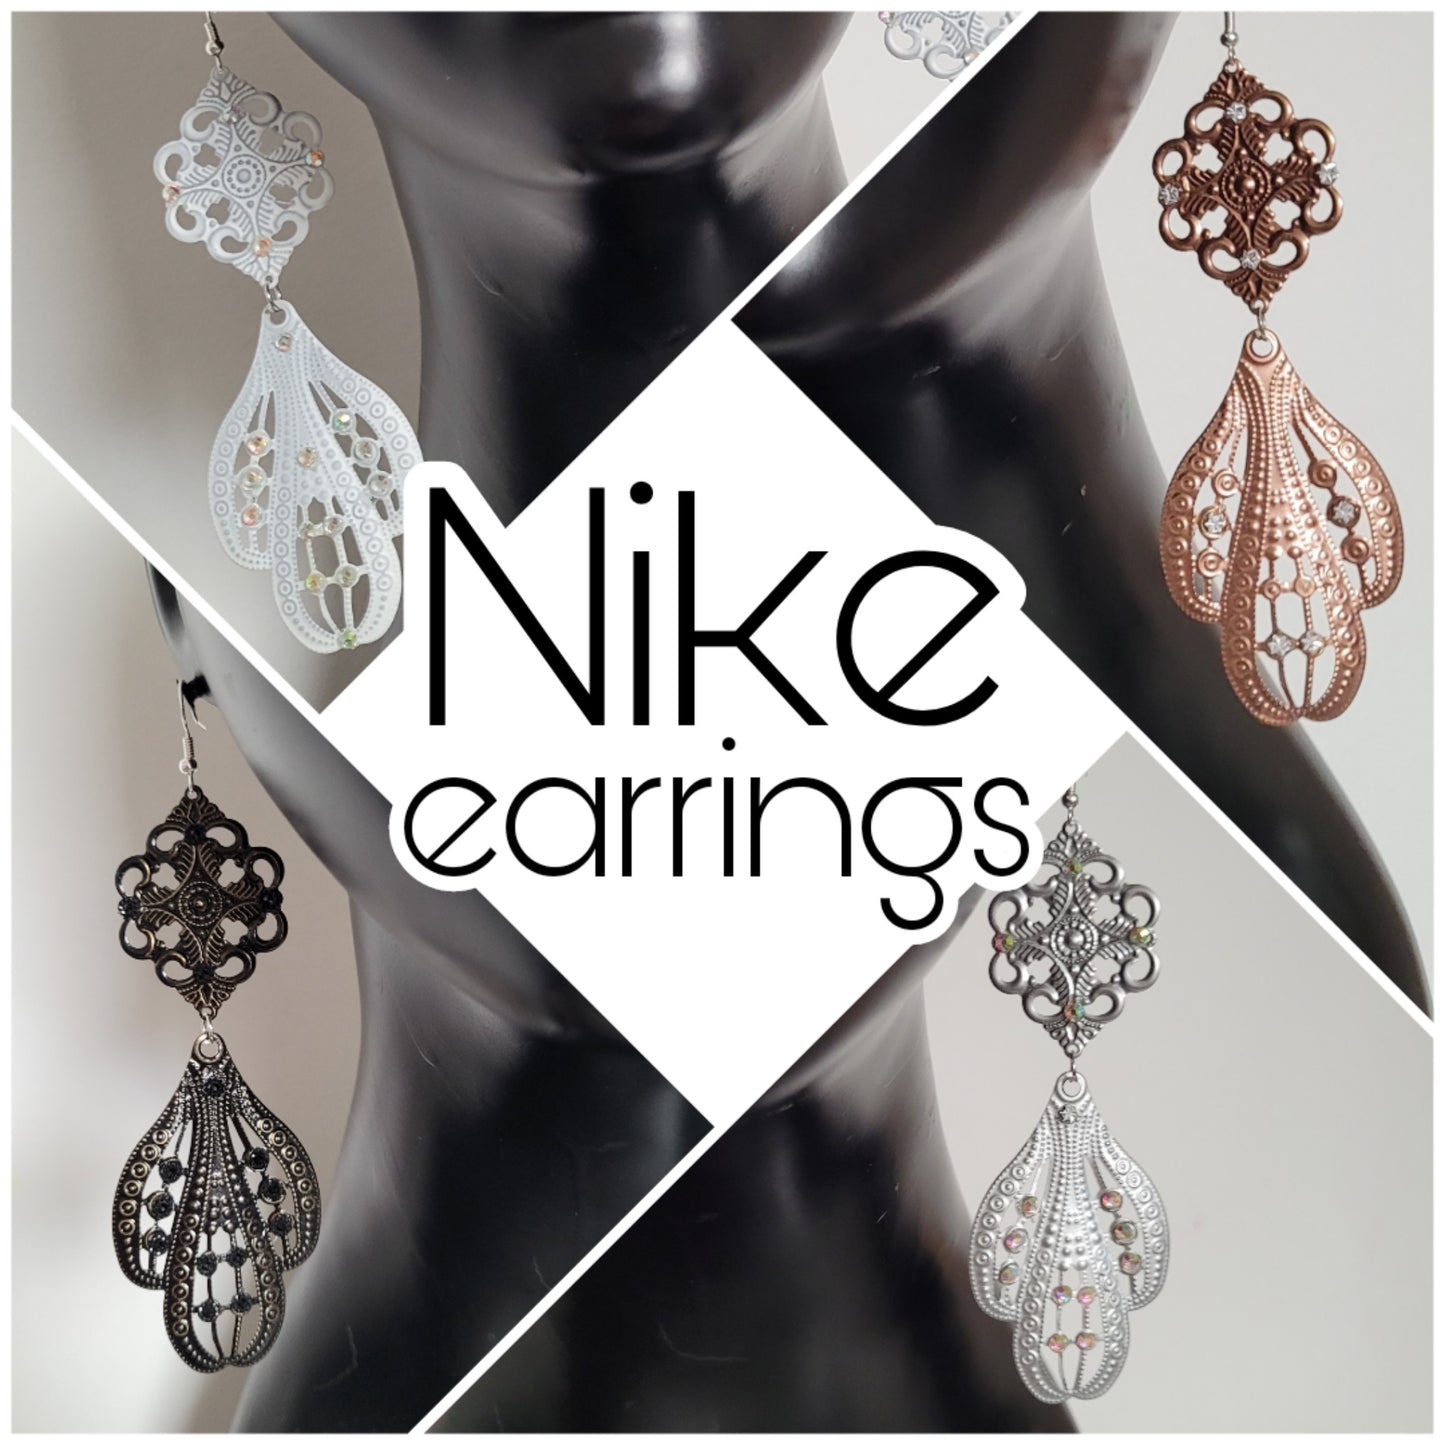 Deusa ex Machina collection: The Nike earrings